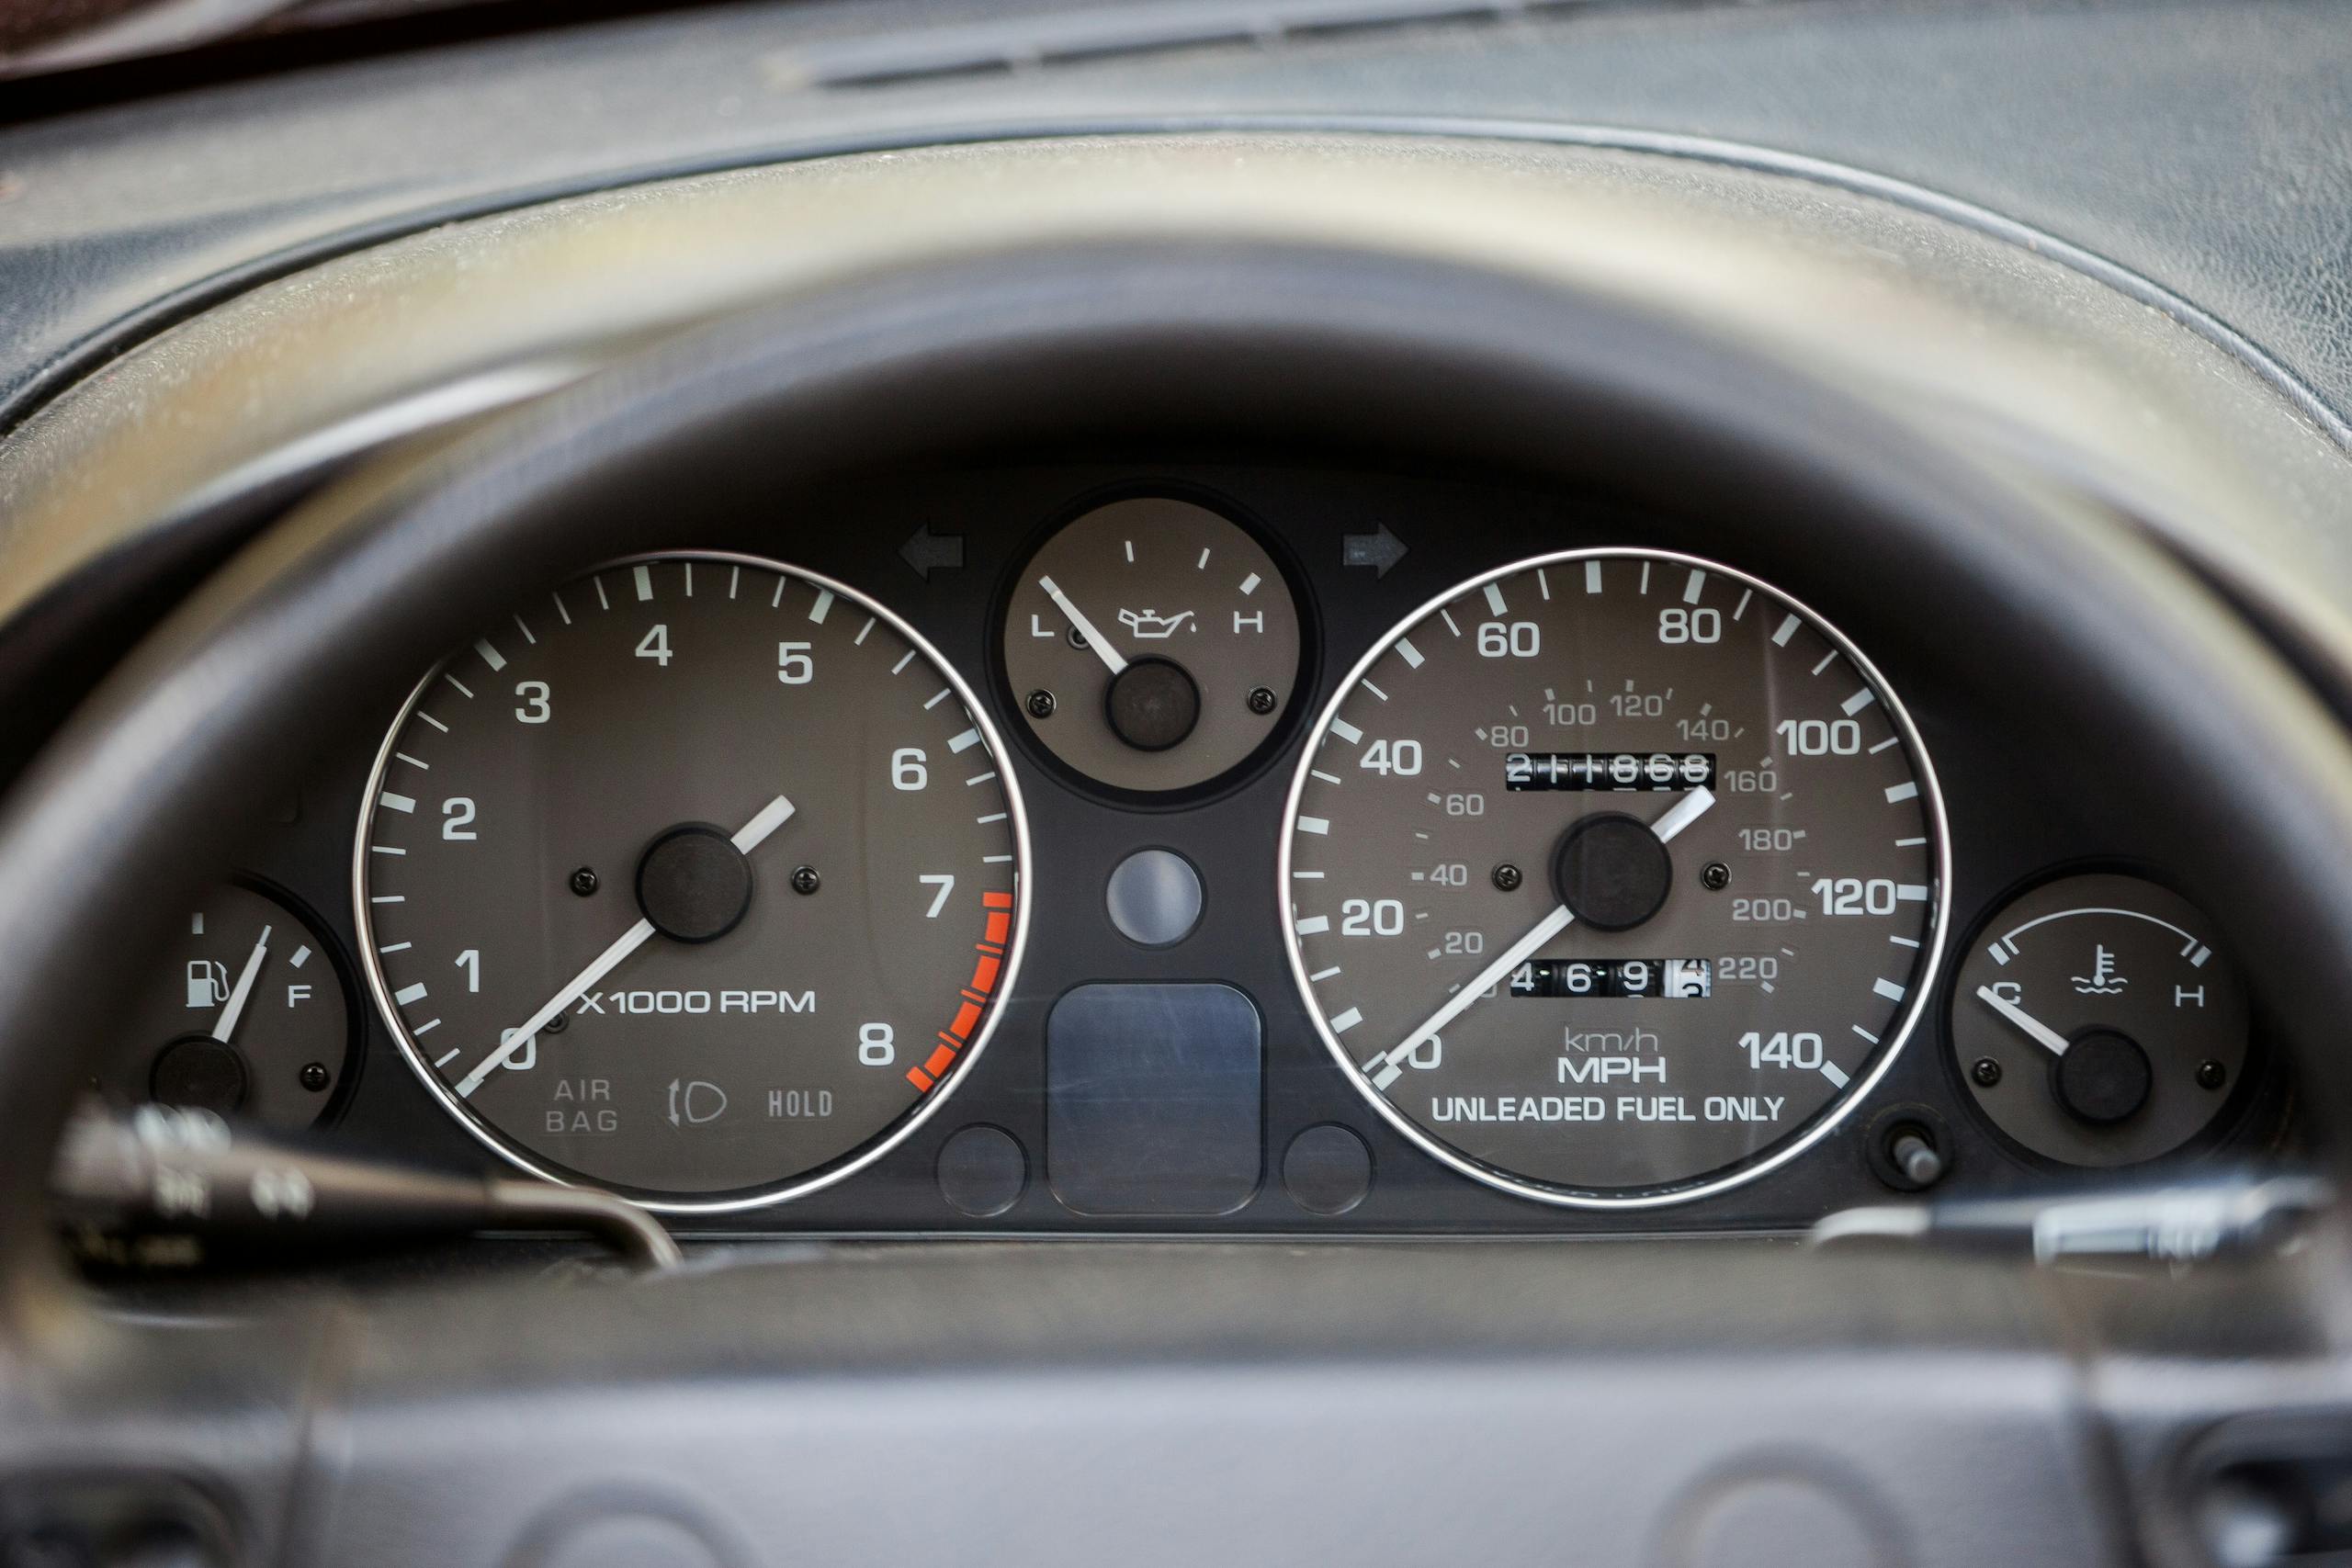 1995 Mazda Miata interior dash driver gauges